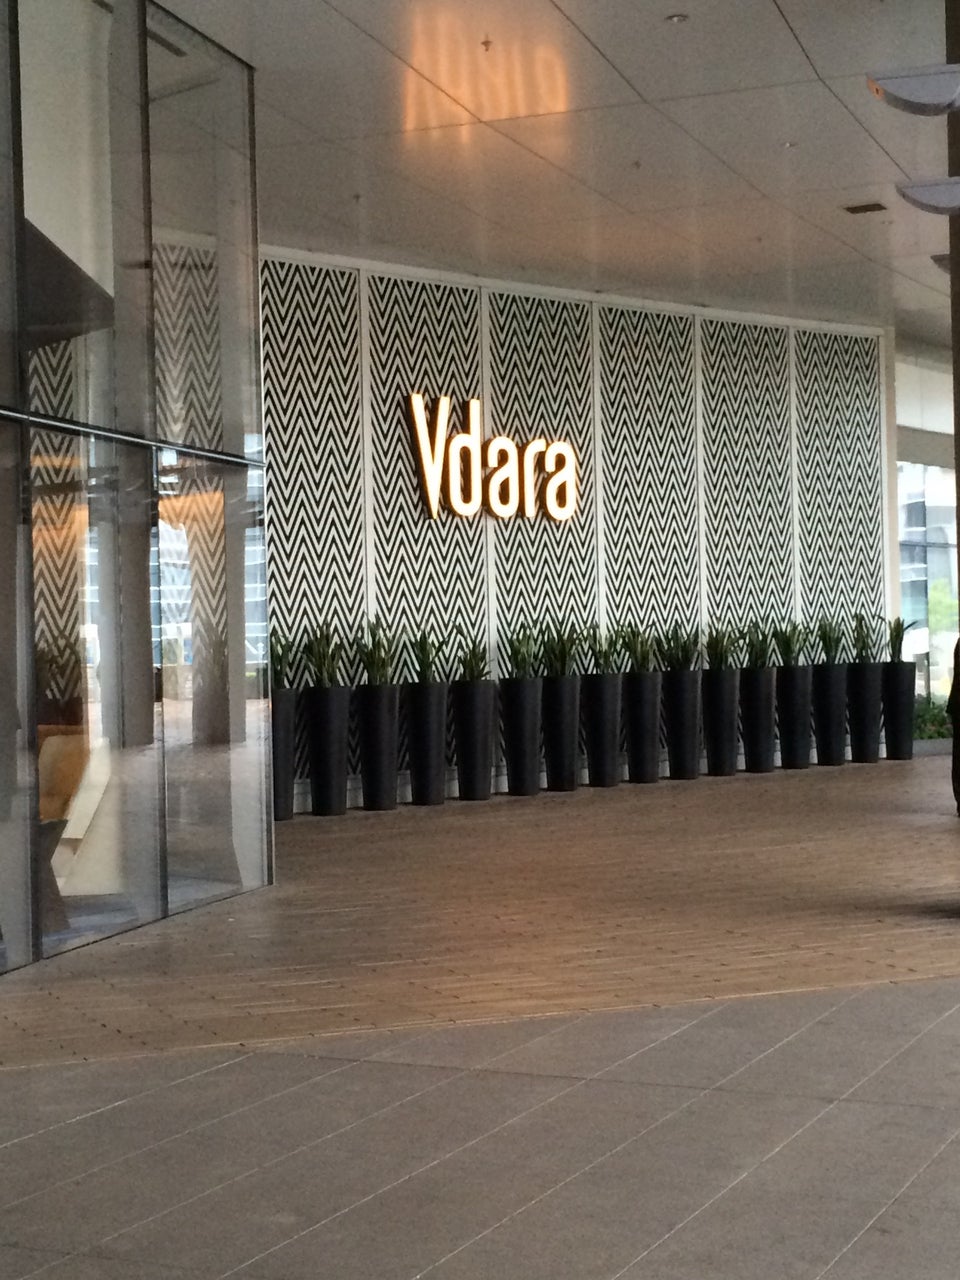 Photo of Vdara Hotel & Spa